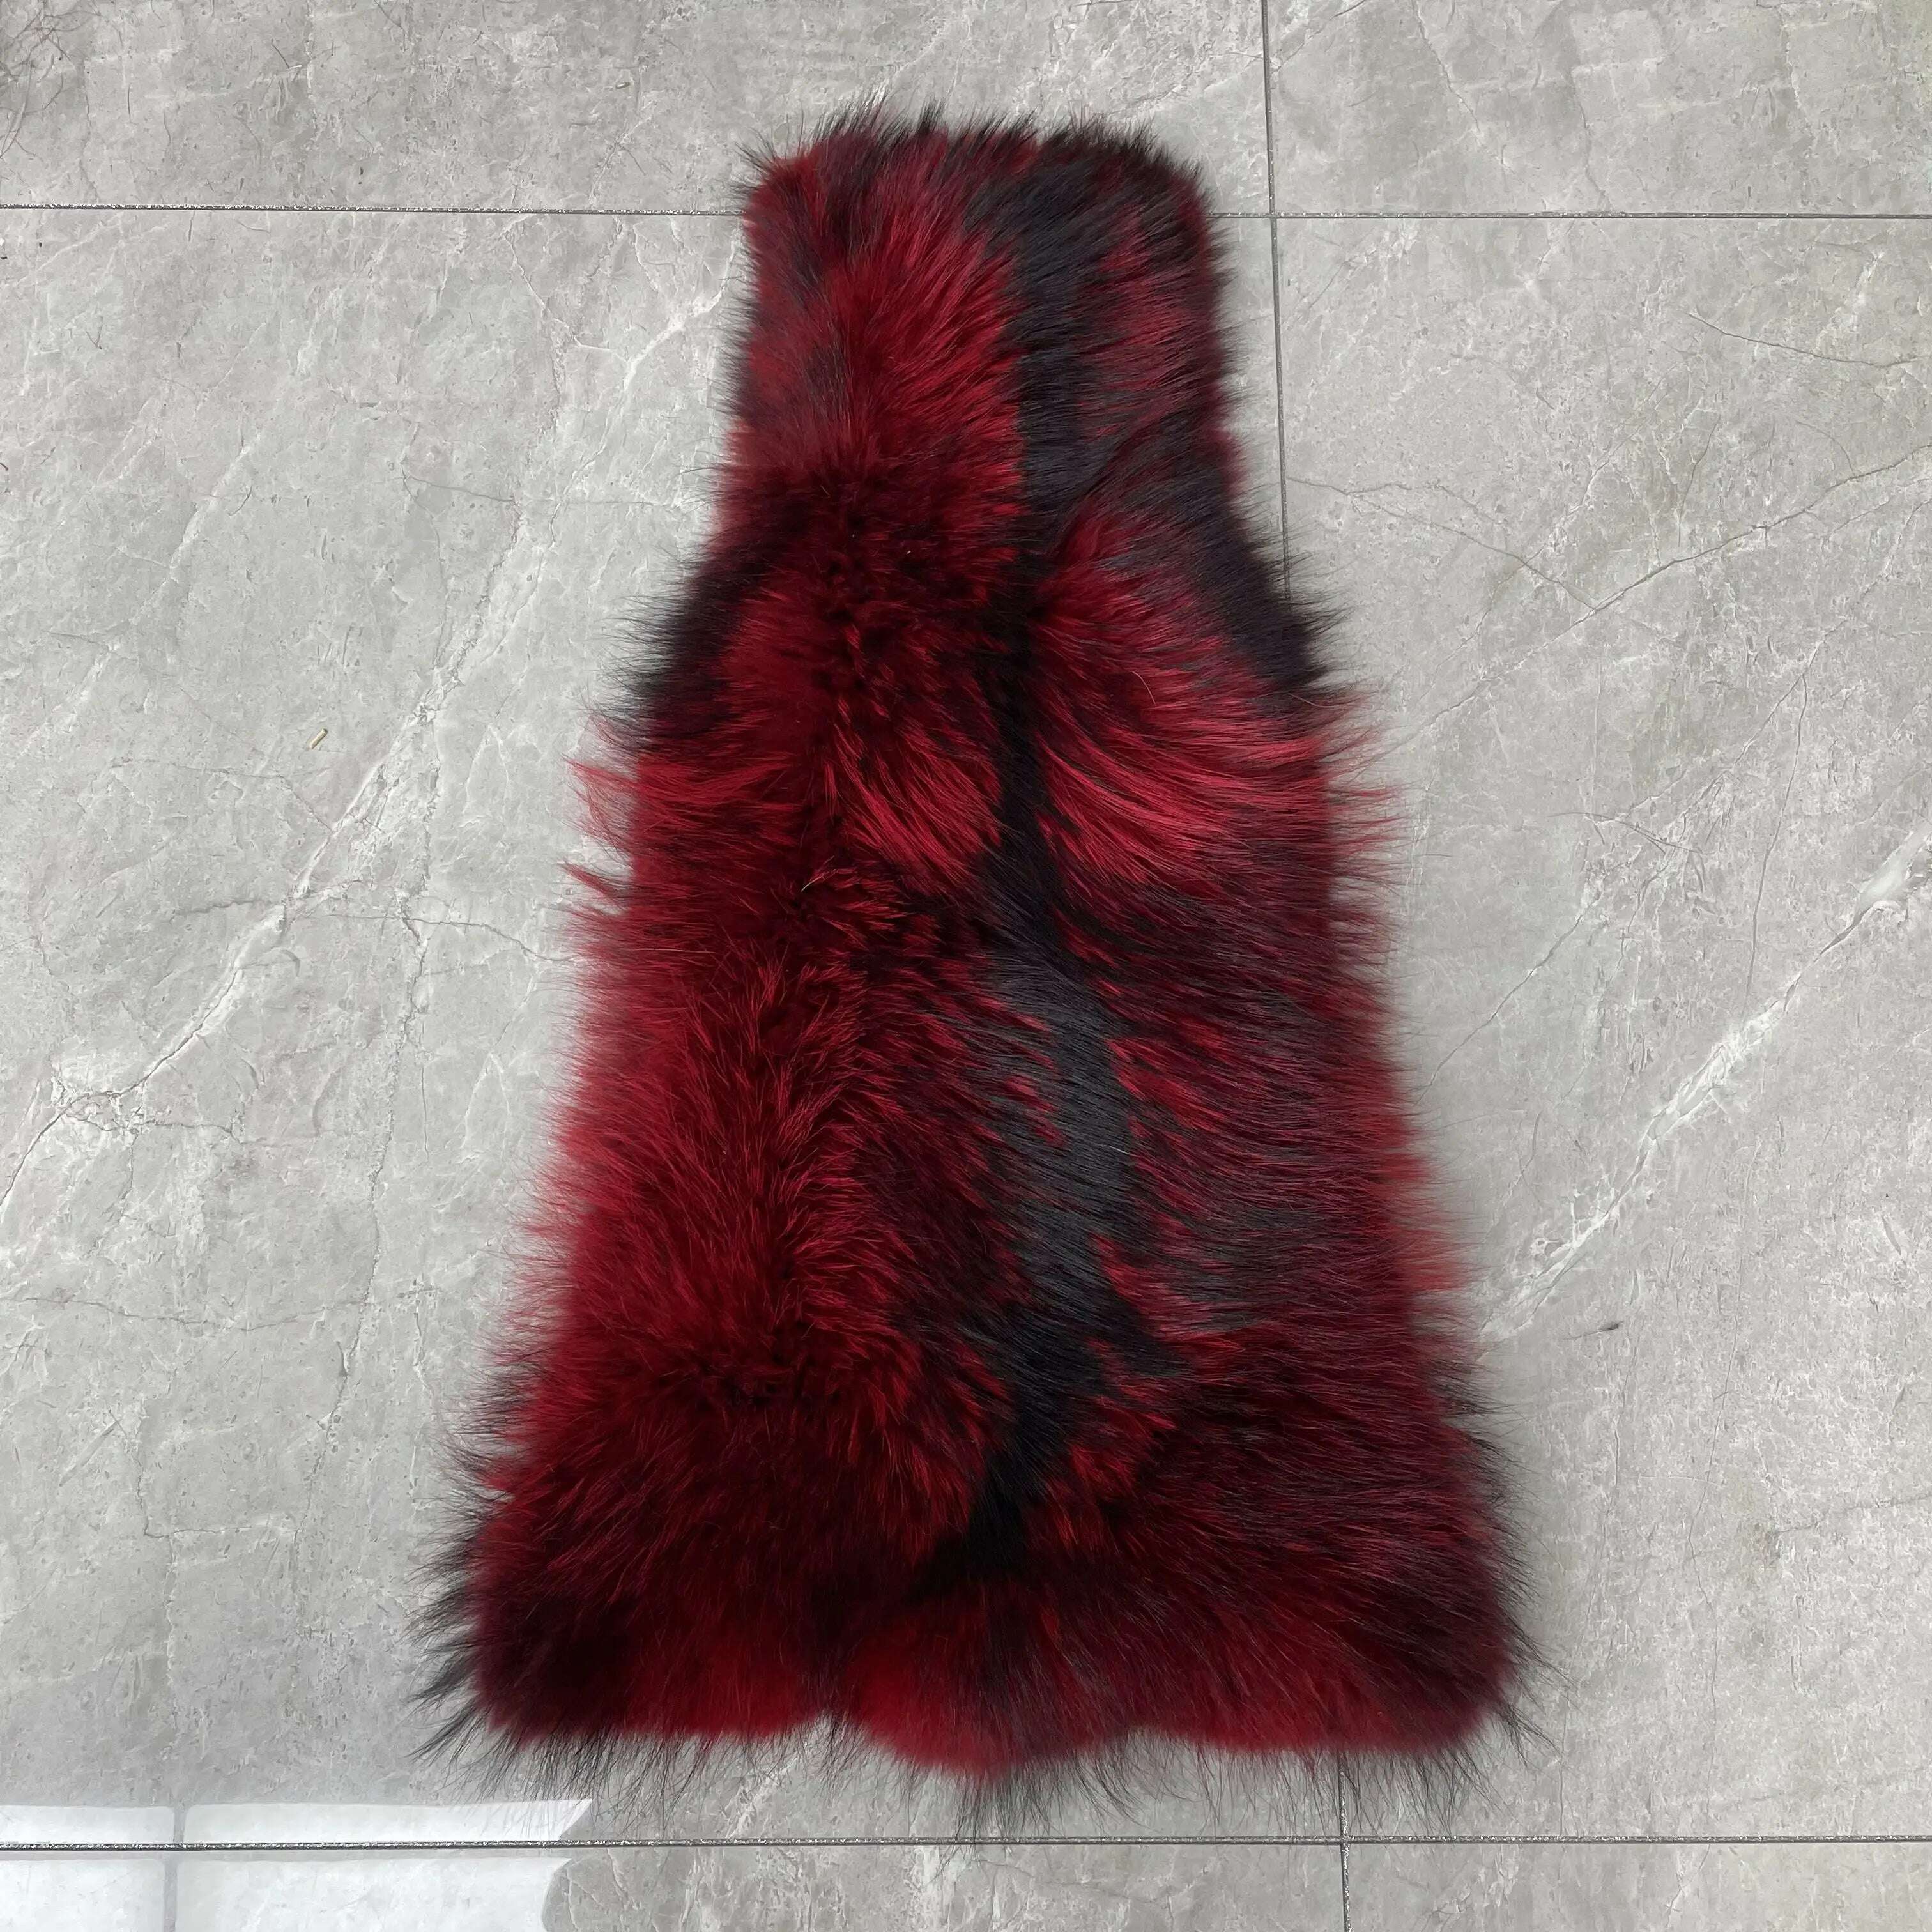 KIMLUD, Real Raccoon Fur Jacket Men Fashion Coat Winter Warm Long Style, RED / XS(88cm), KIMLUD Women's Clothes